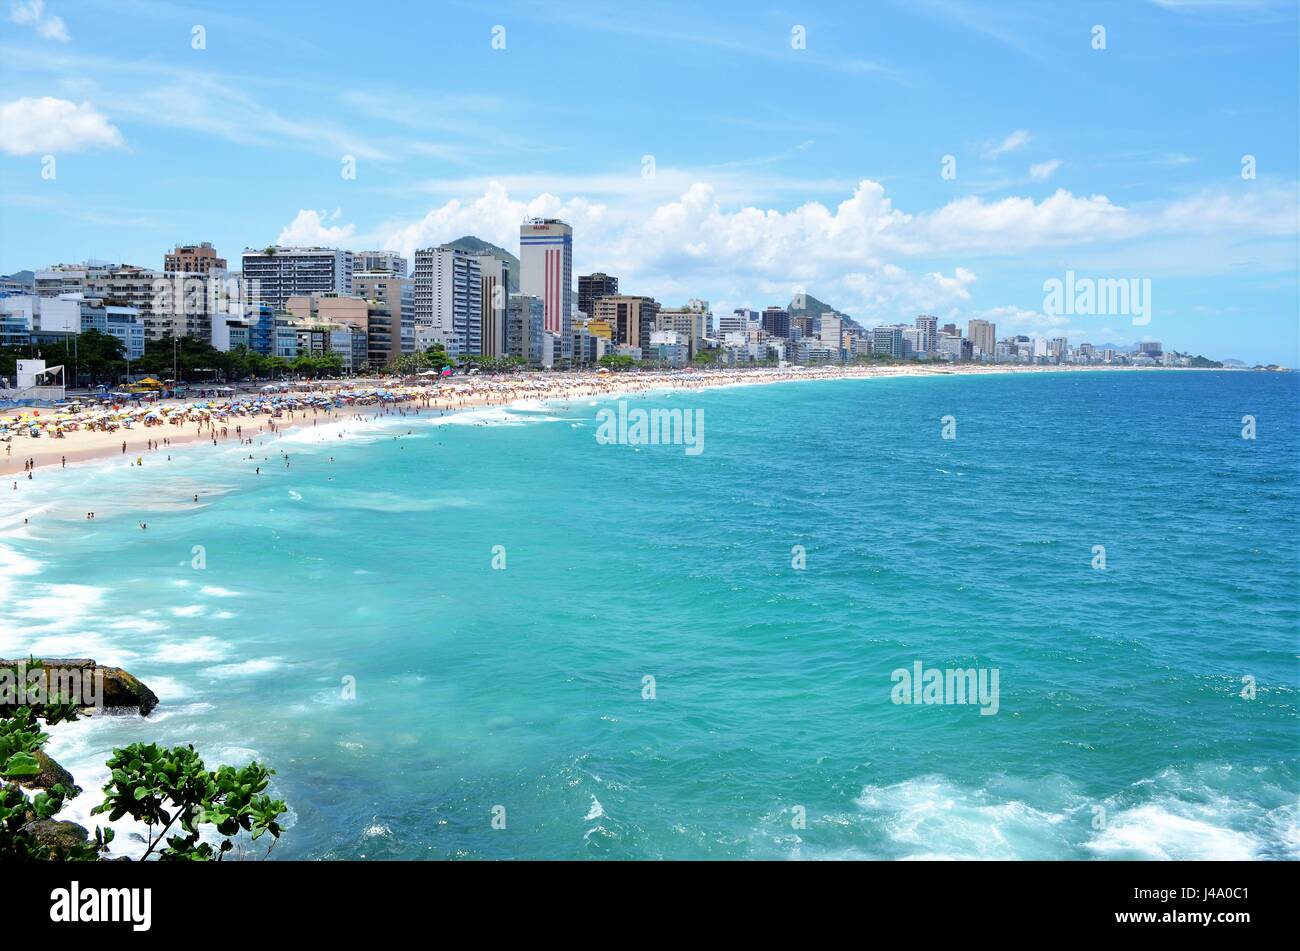 Leblon beach view from the gazebo in the city of Rio de Janeiro. Brazil Stock Photo